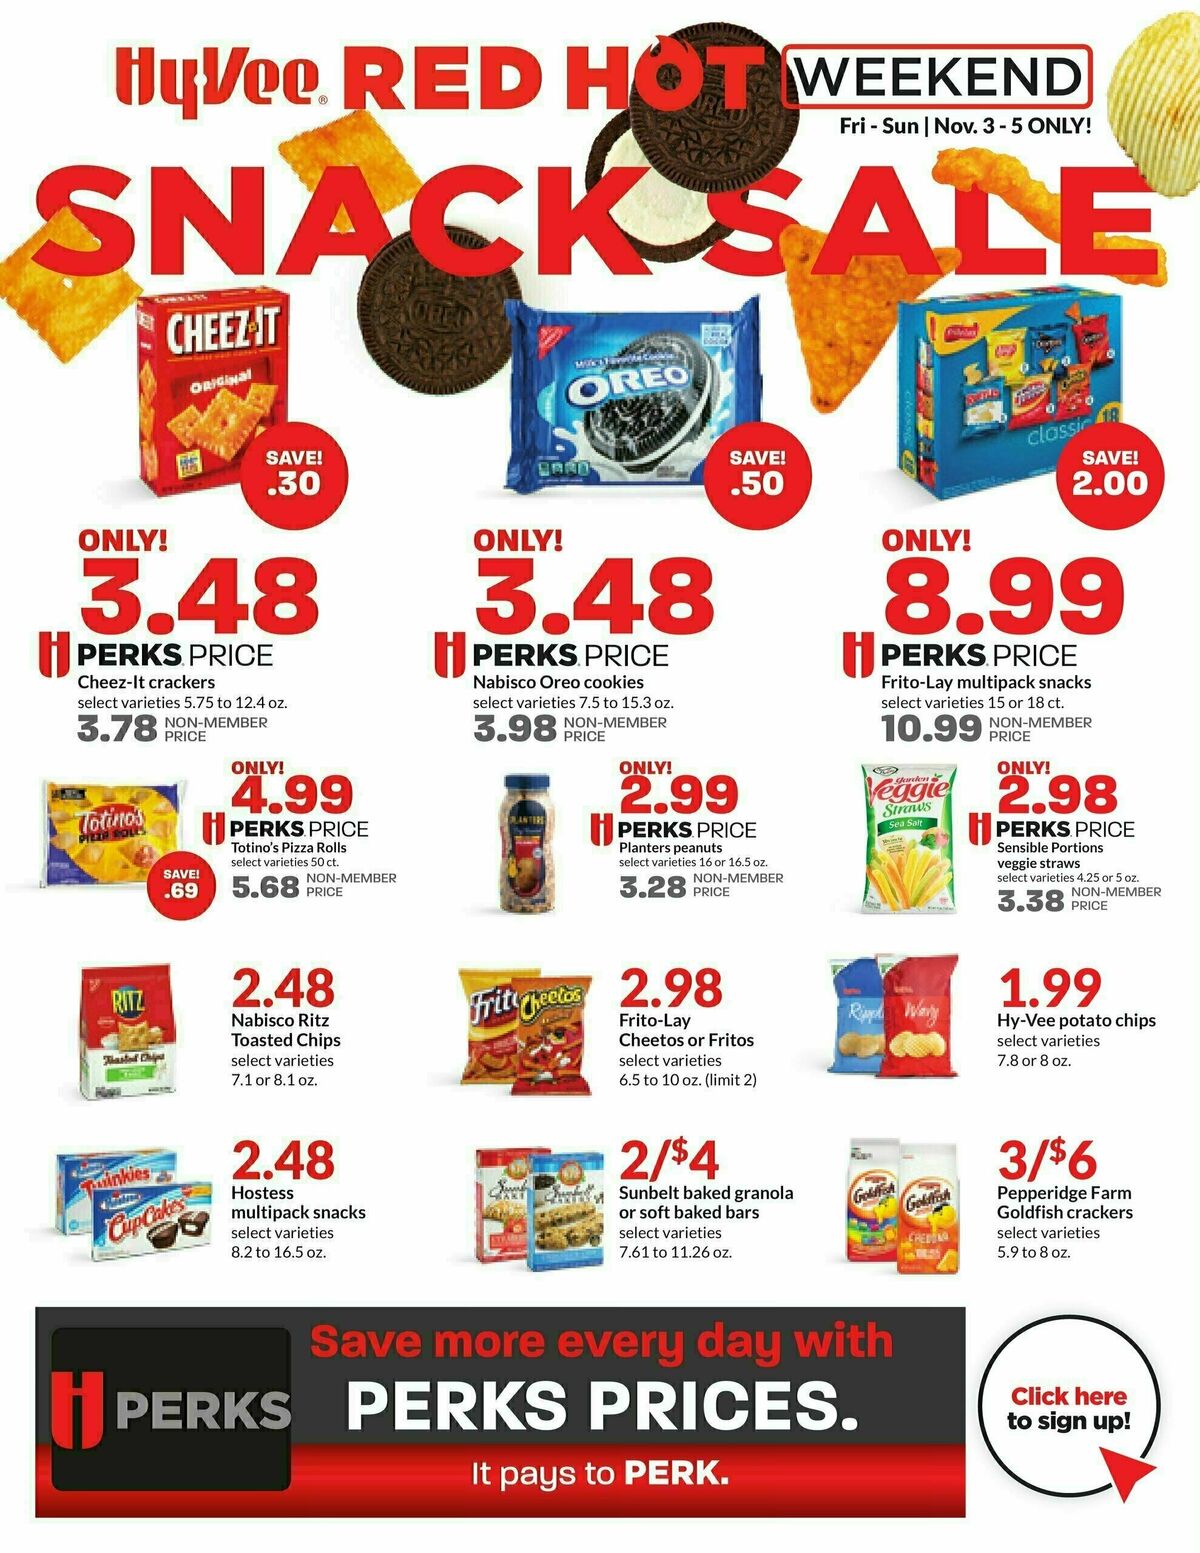 Hy-Vee Snack Sale Weekly Ad from November 3